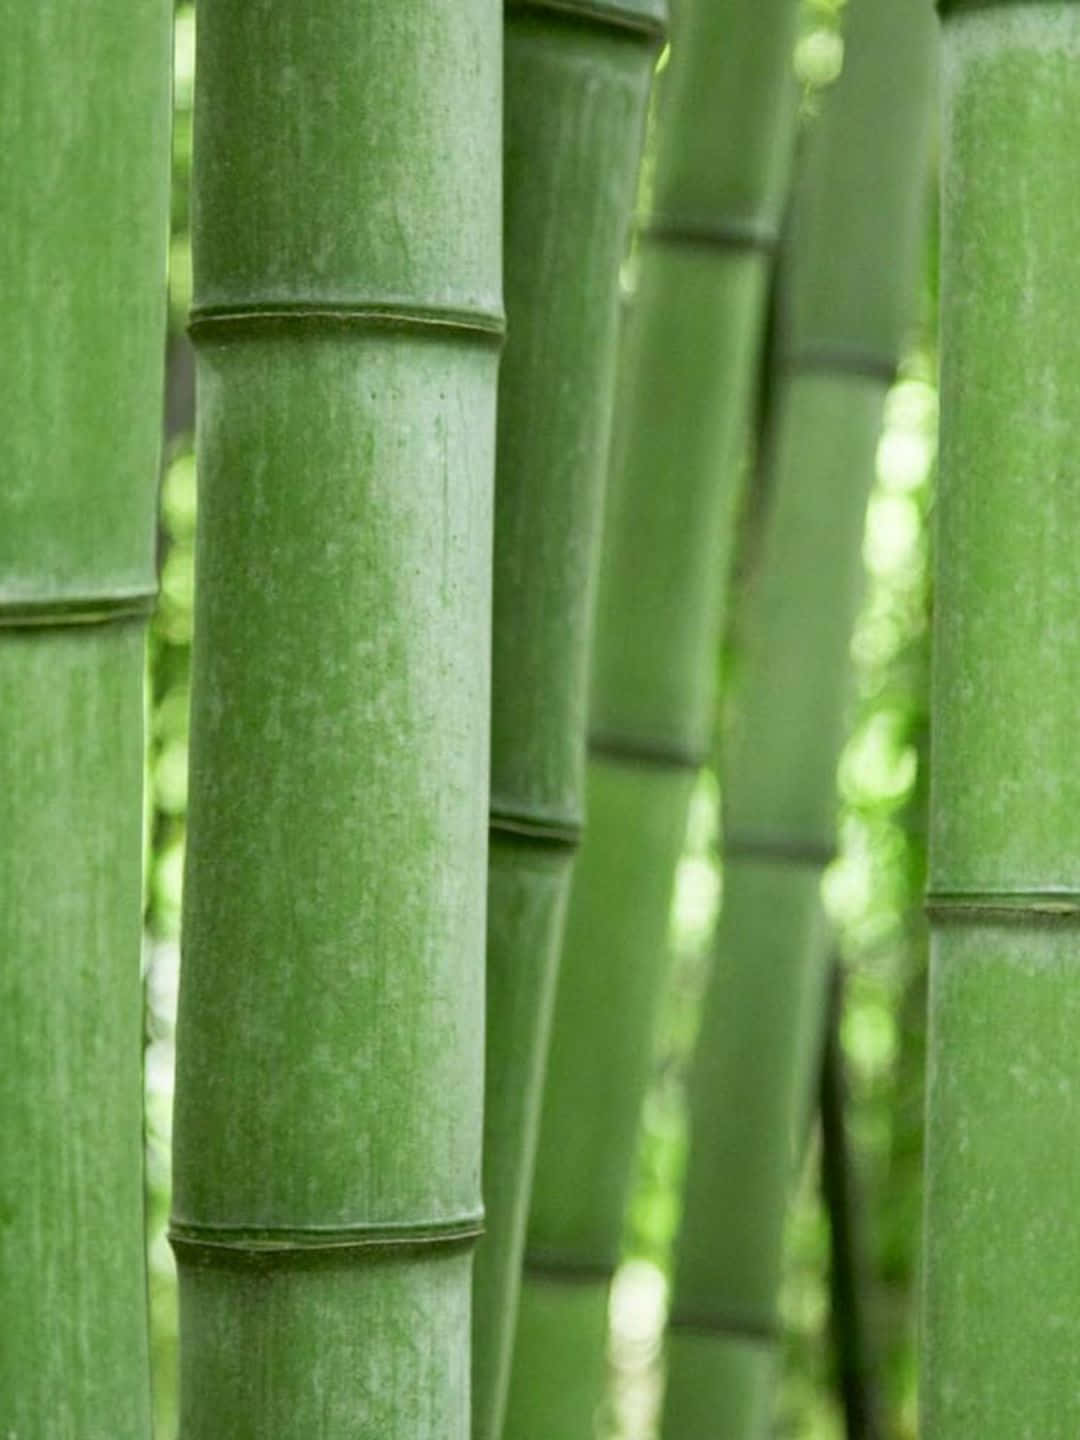 1440p Bamboo Background Spotty Stems